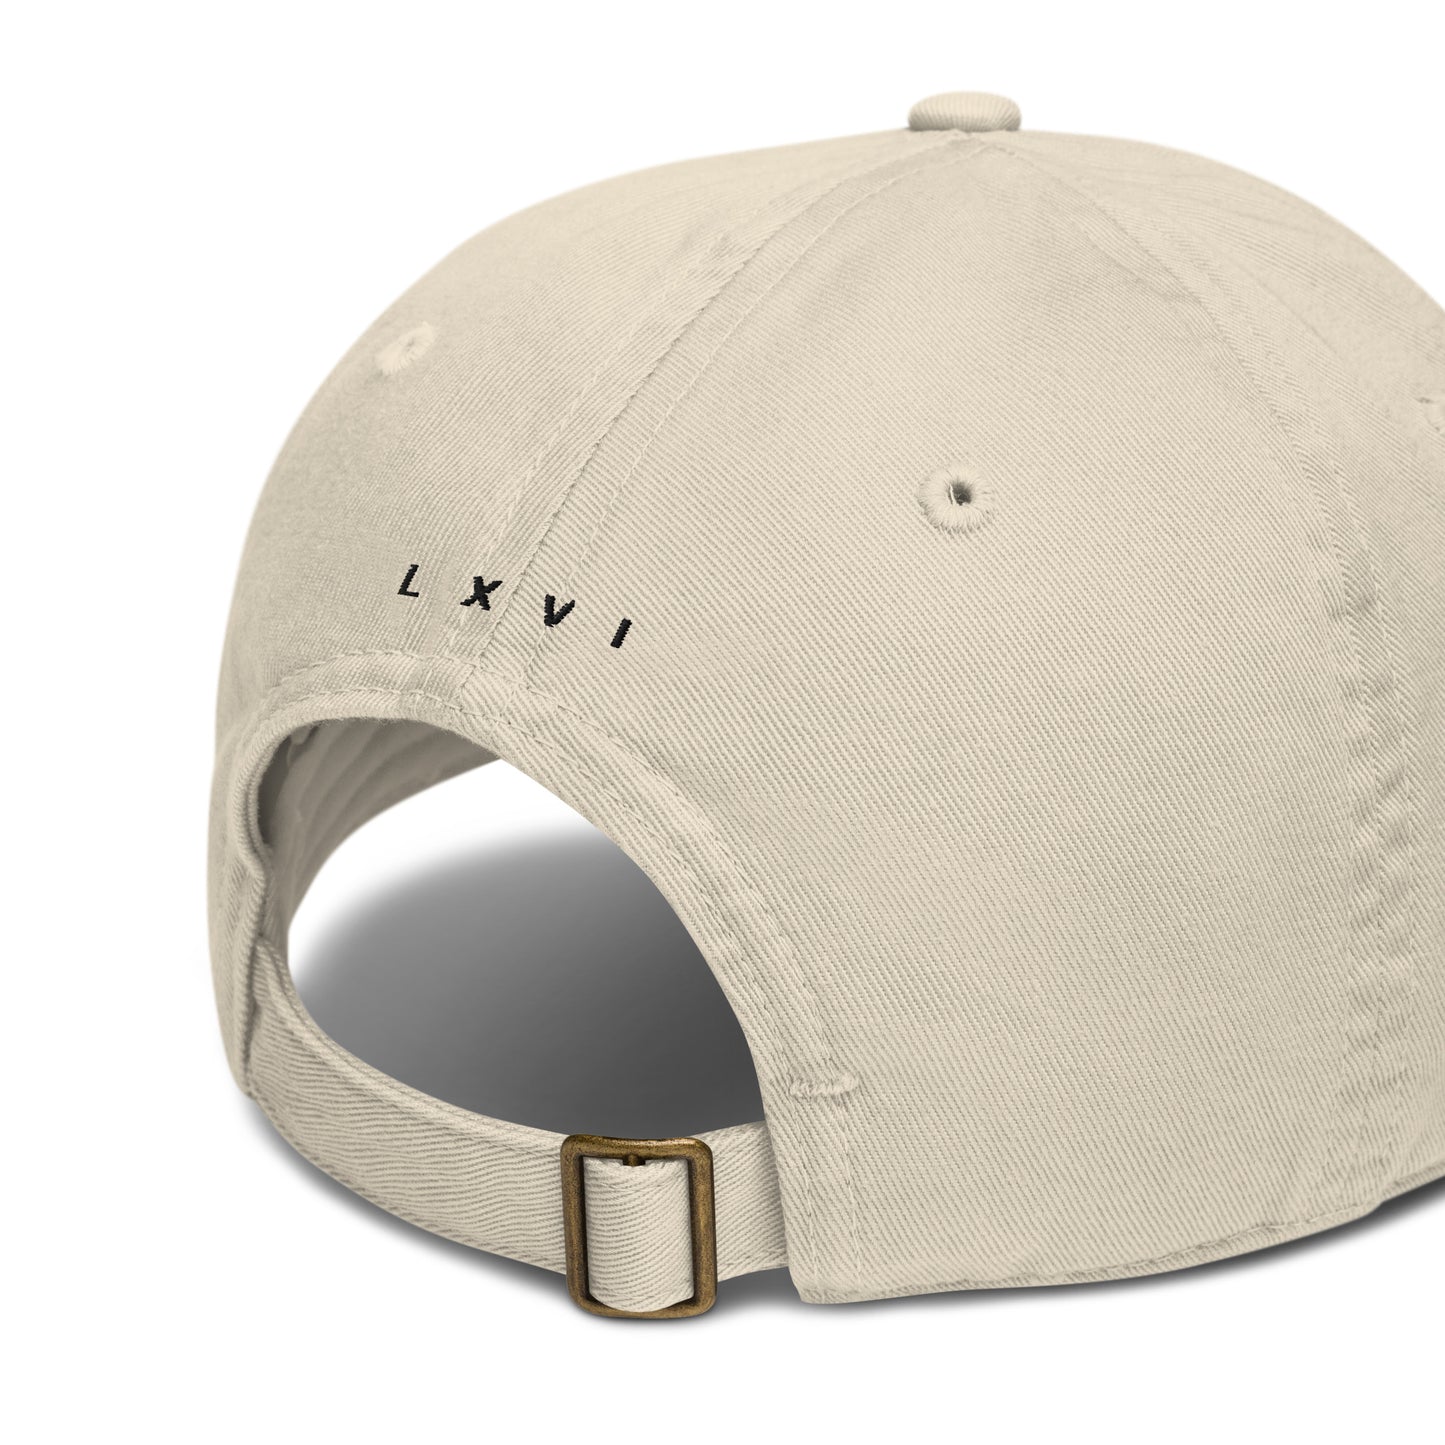 Embroidered “Black 66 Logo” L X V I Dad/Baseball Hat (organic)